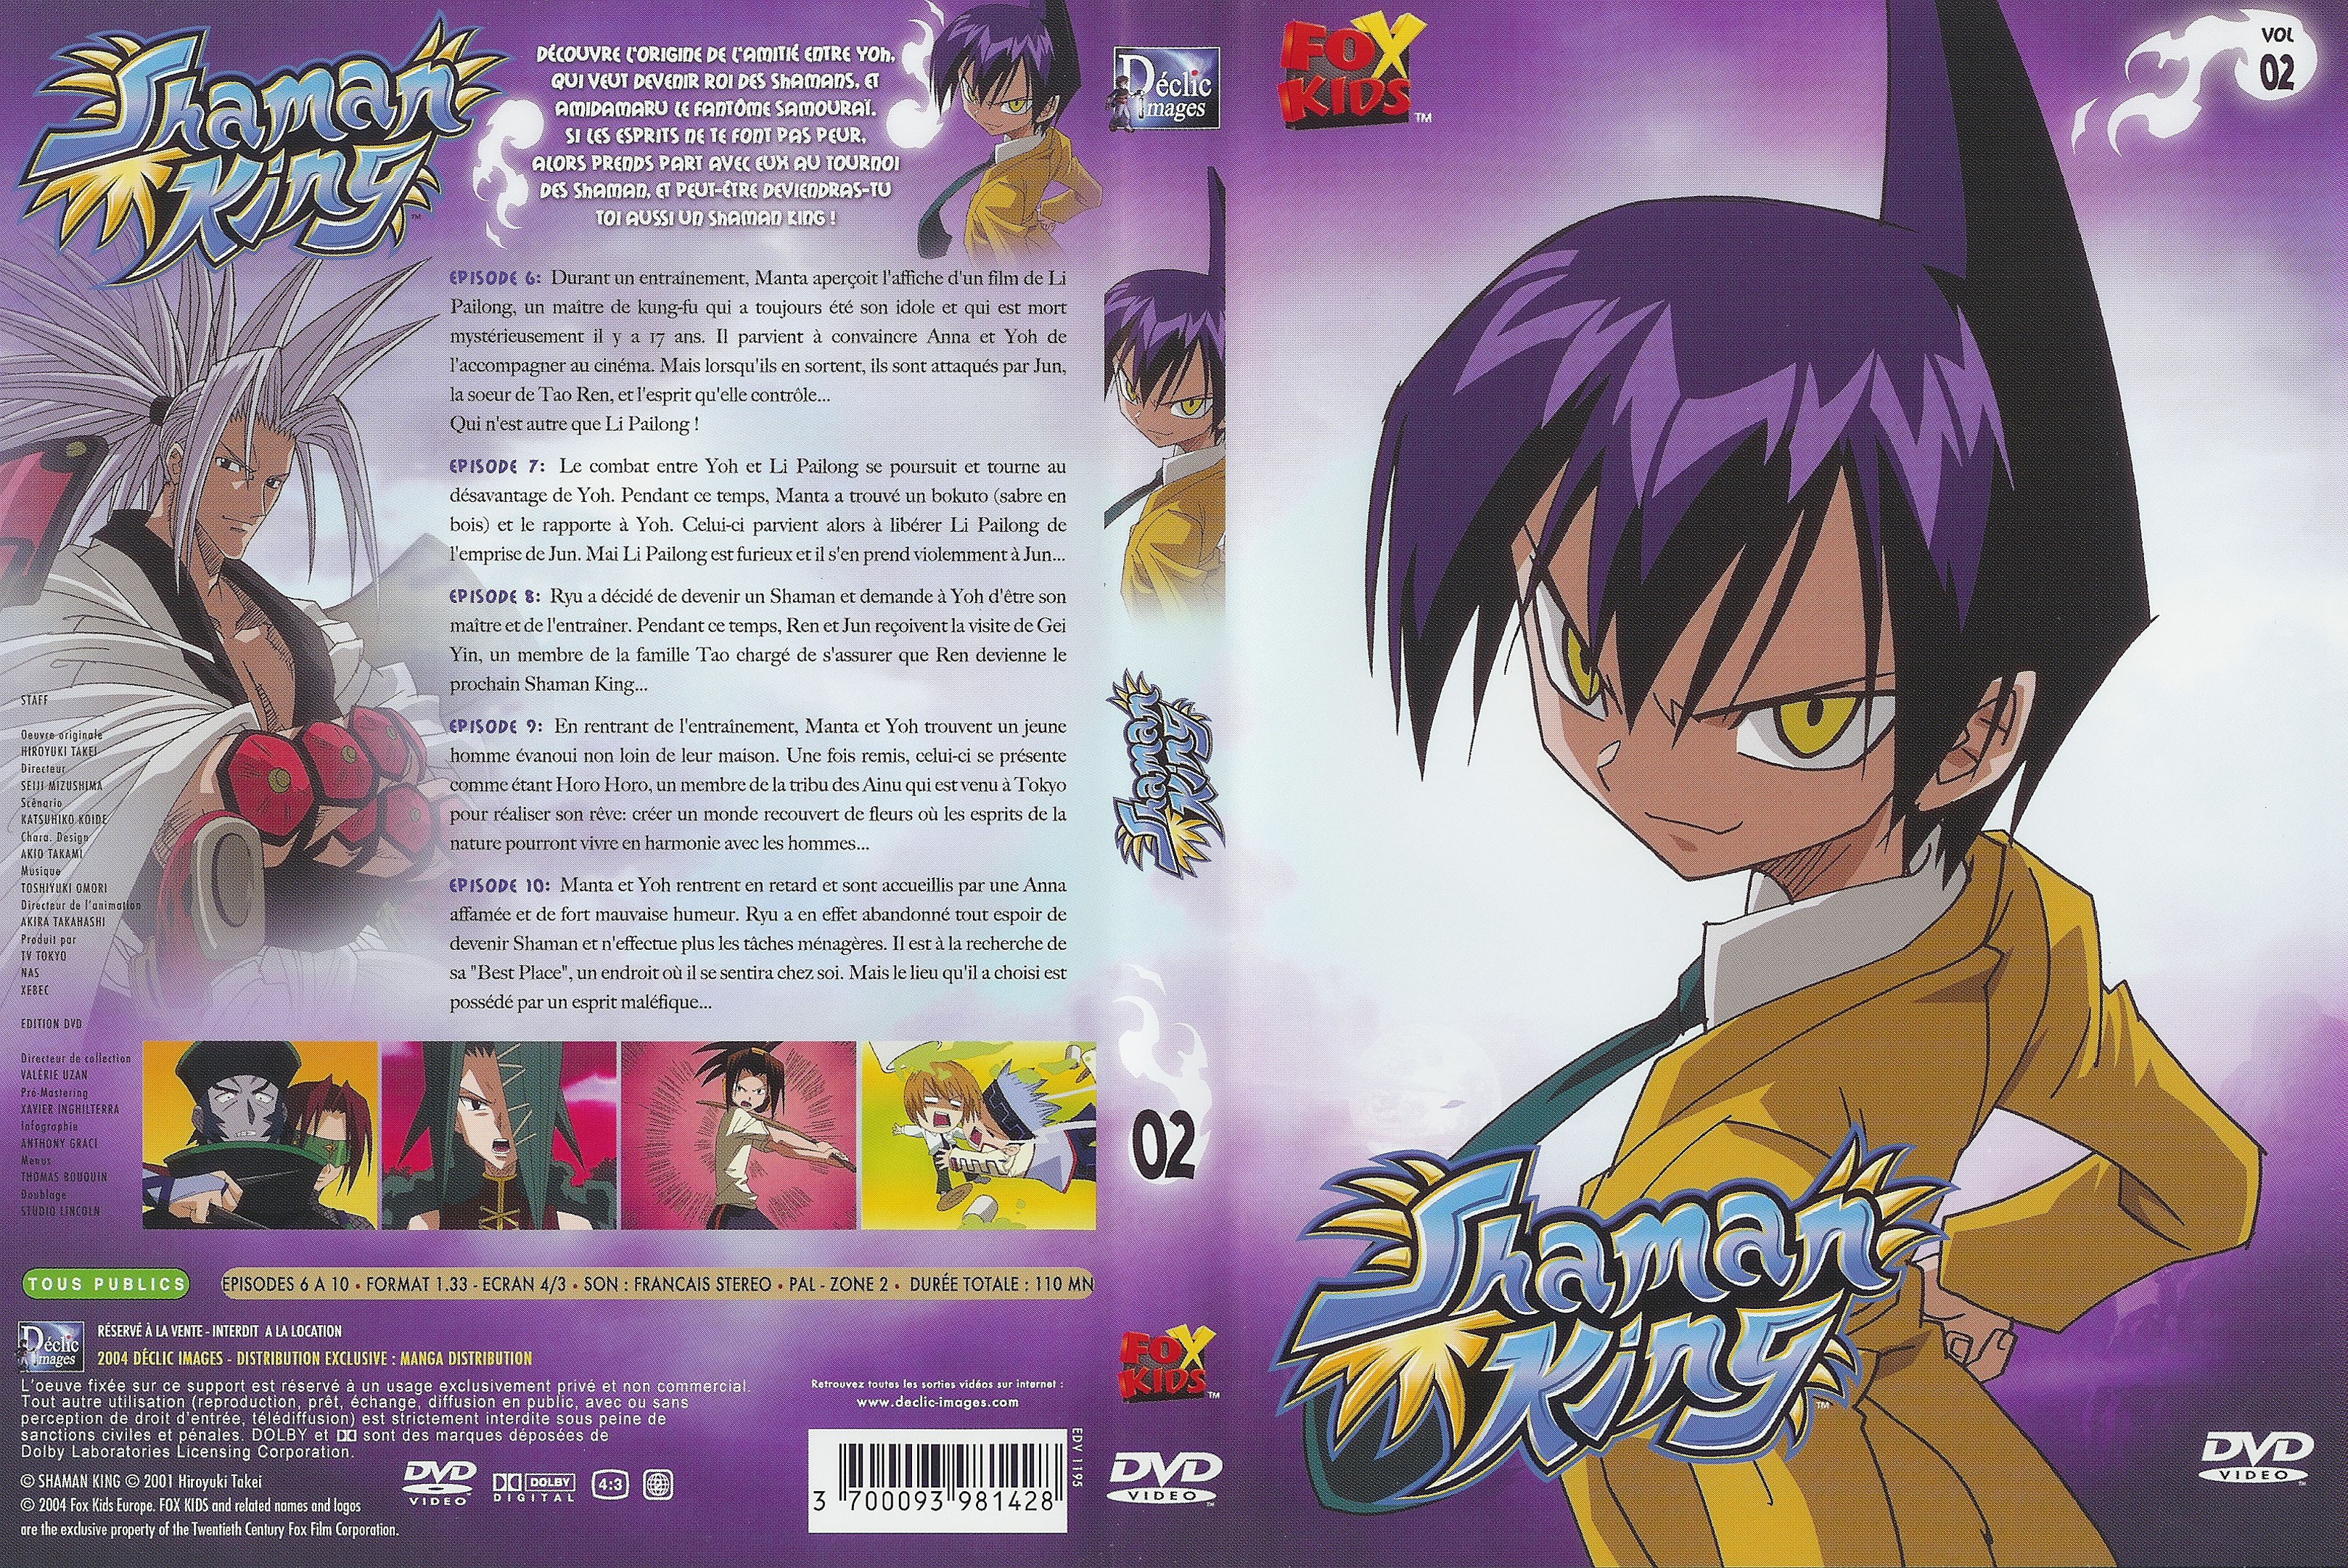 Jaquette DVD Shaman king vol 02